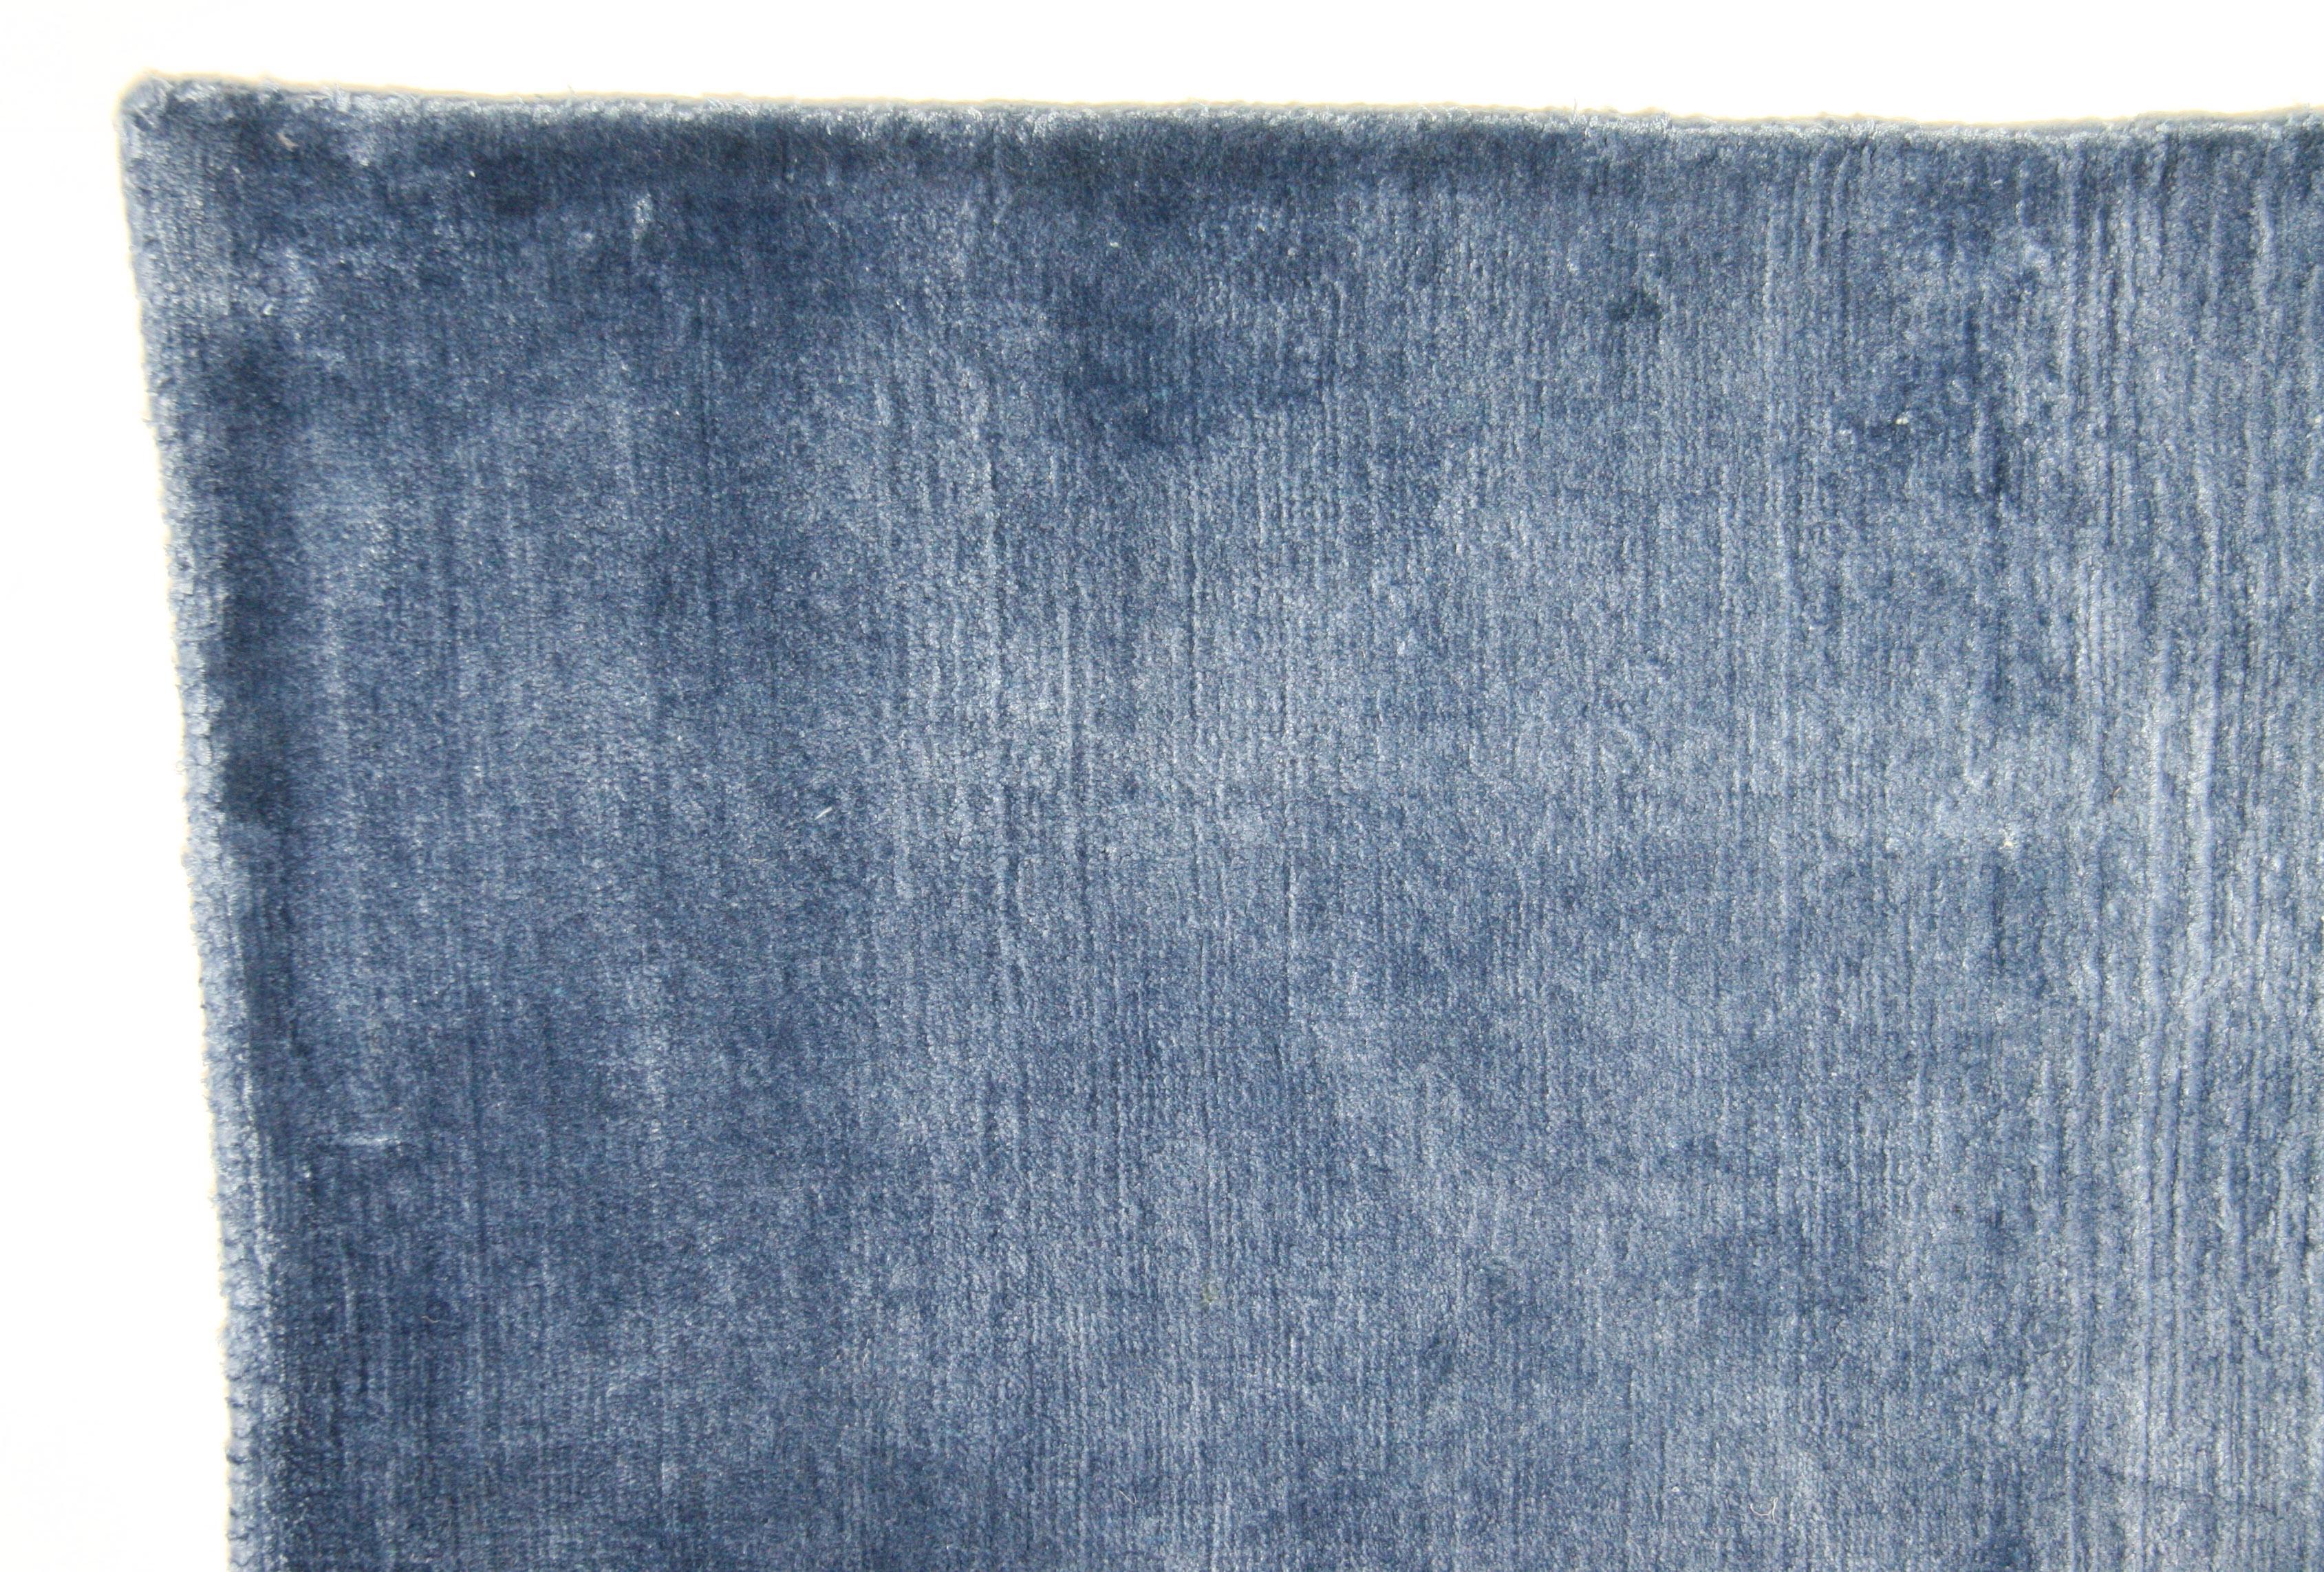 Plush, dense pile medium blue area rug. Viscose. Made in India using natural vegetal dyes.